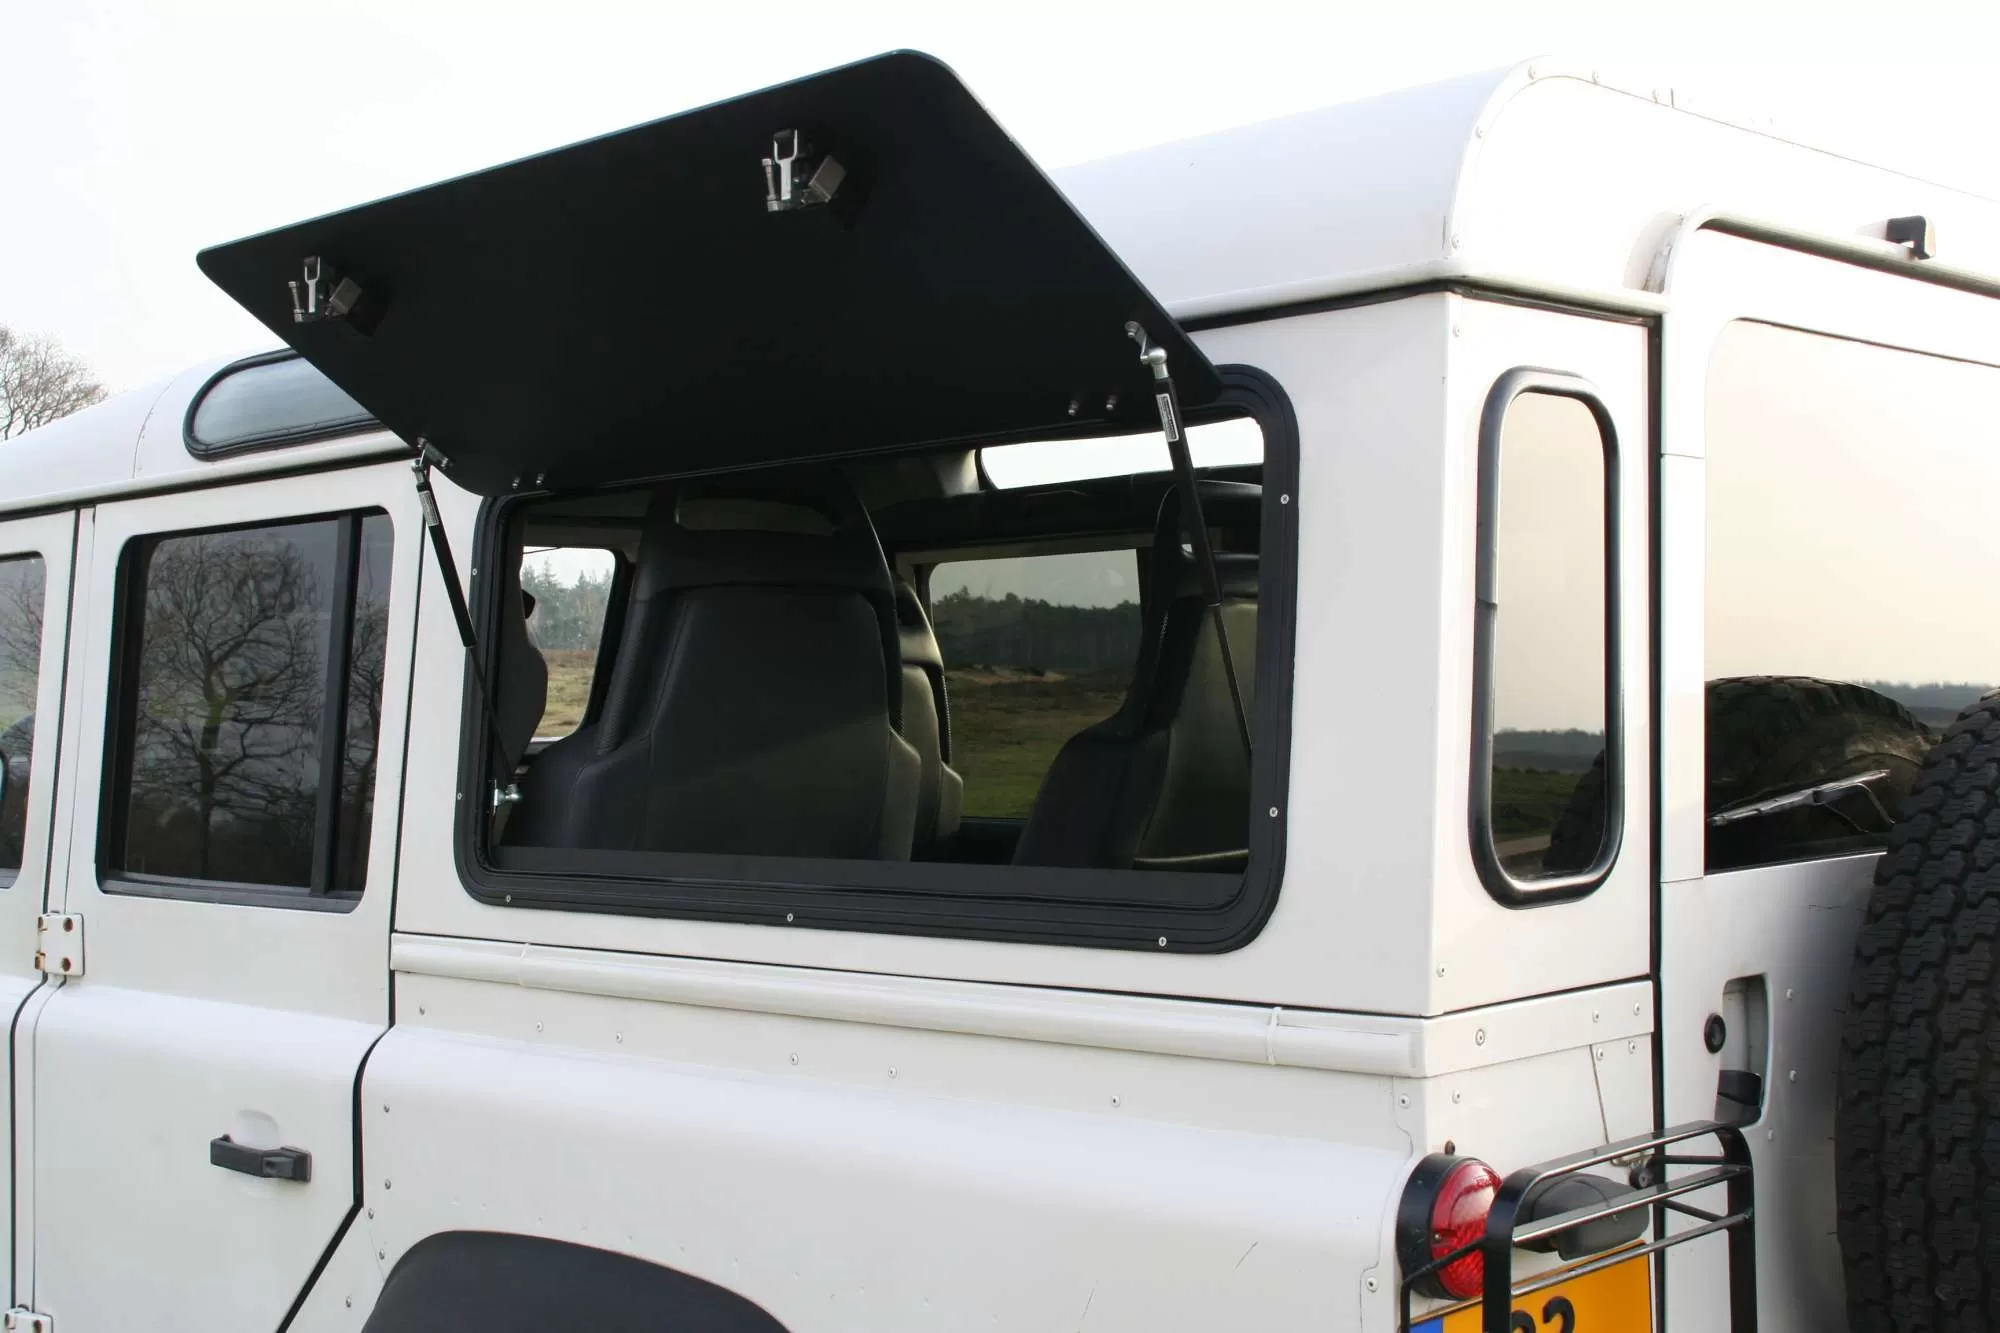 Explore Glazing gullwing window aluminium Land Rover Defender 90 or Land Rover Defender 110